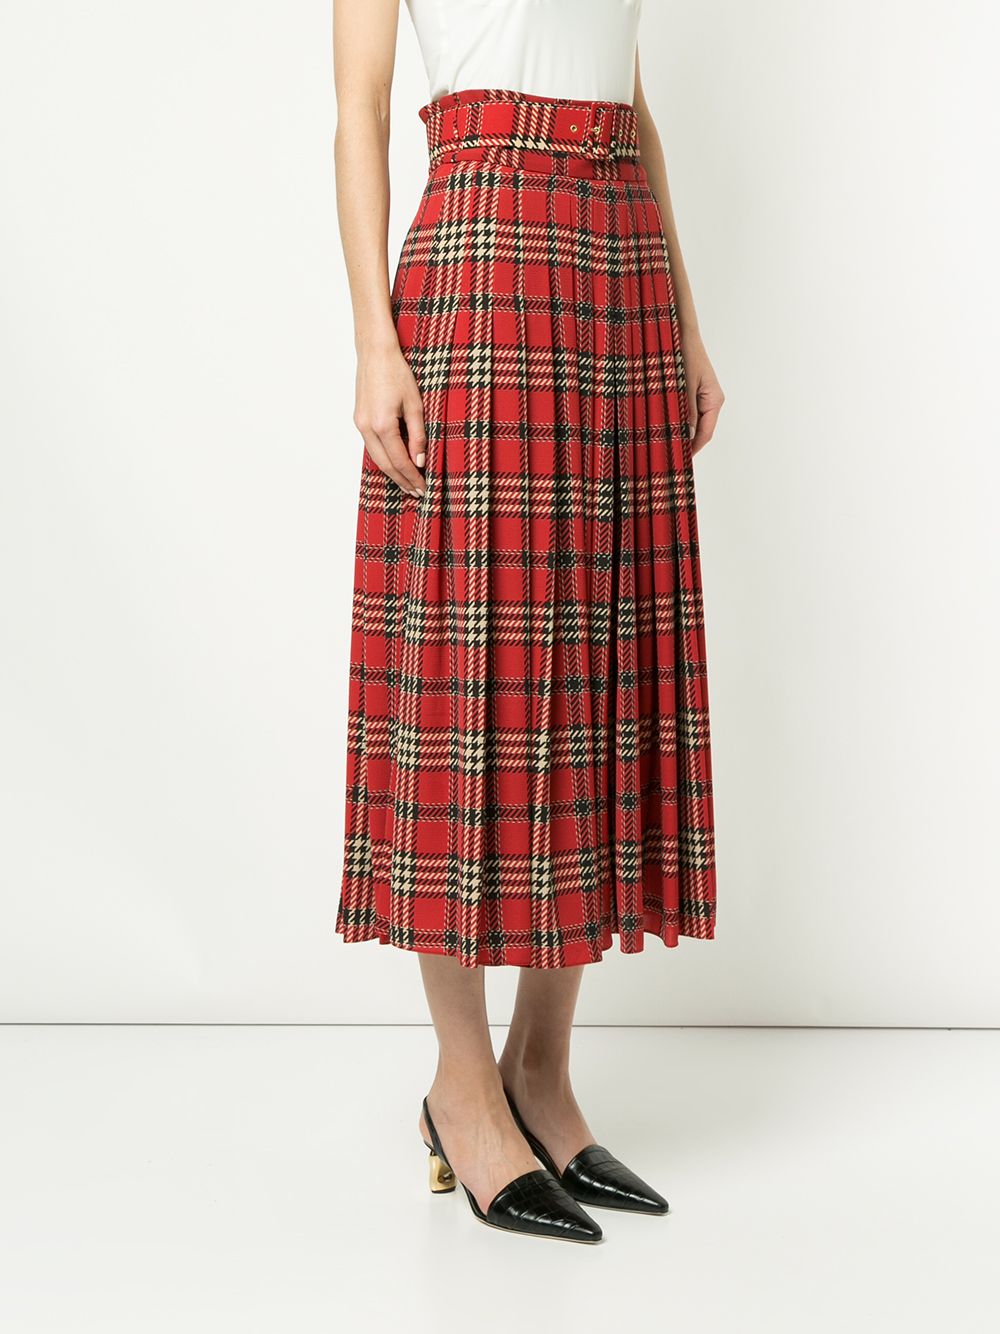 Kate Middleton red pleated tartan check midi skirt